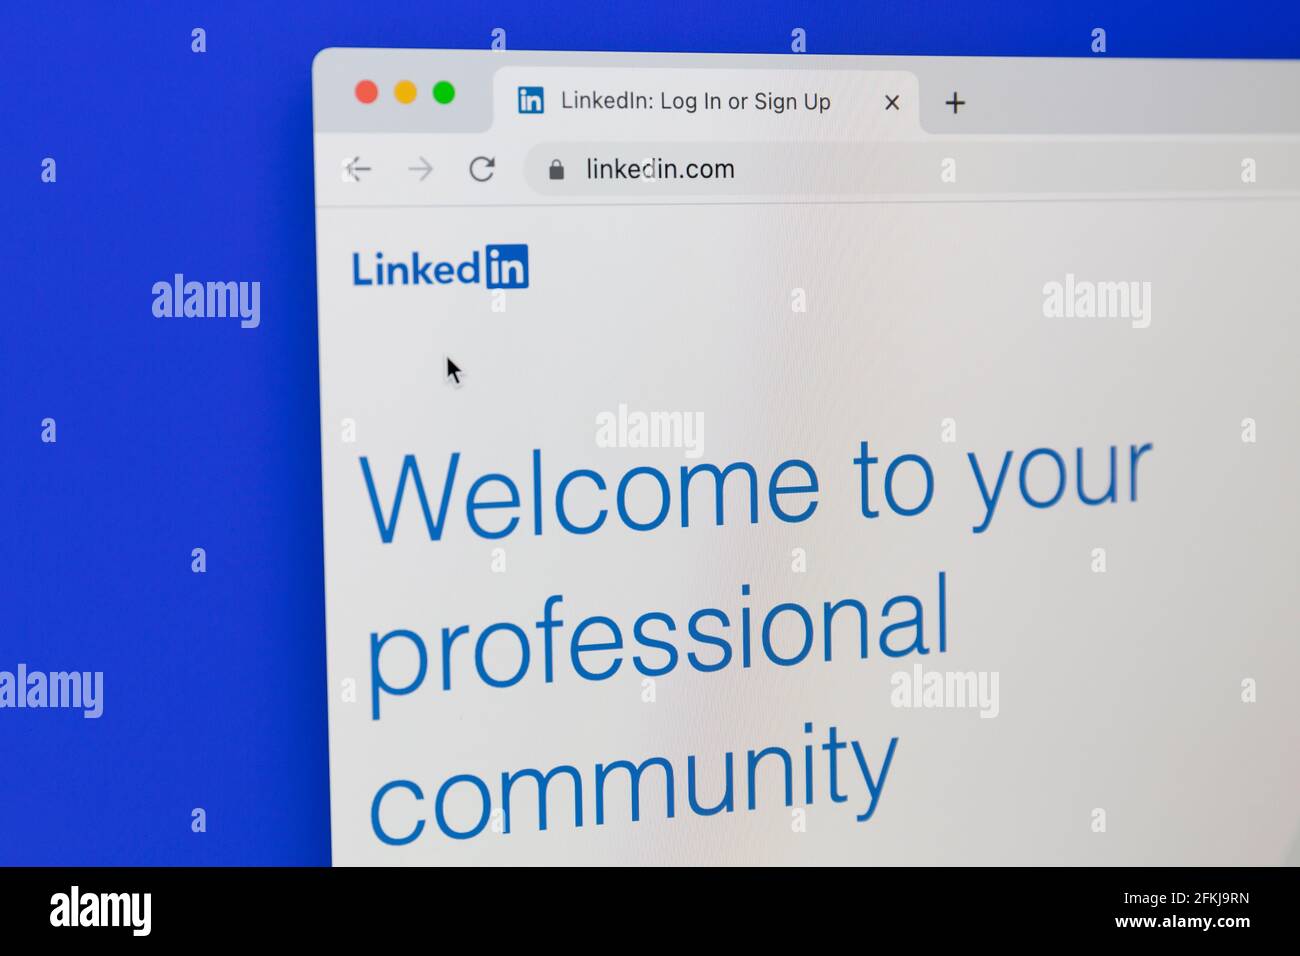 LinkedIn Login 2020: How to LinkedIn Sign In Desktop? 